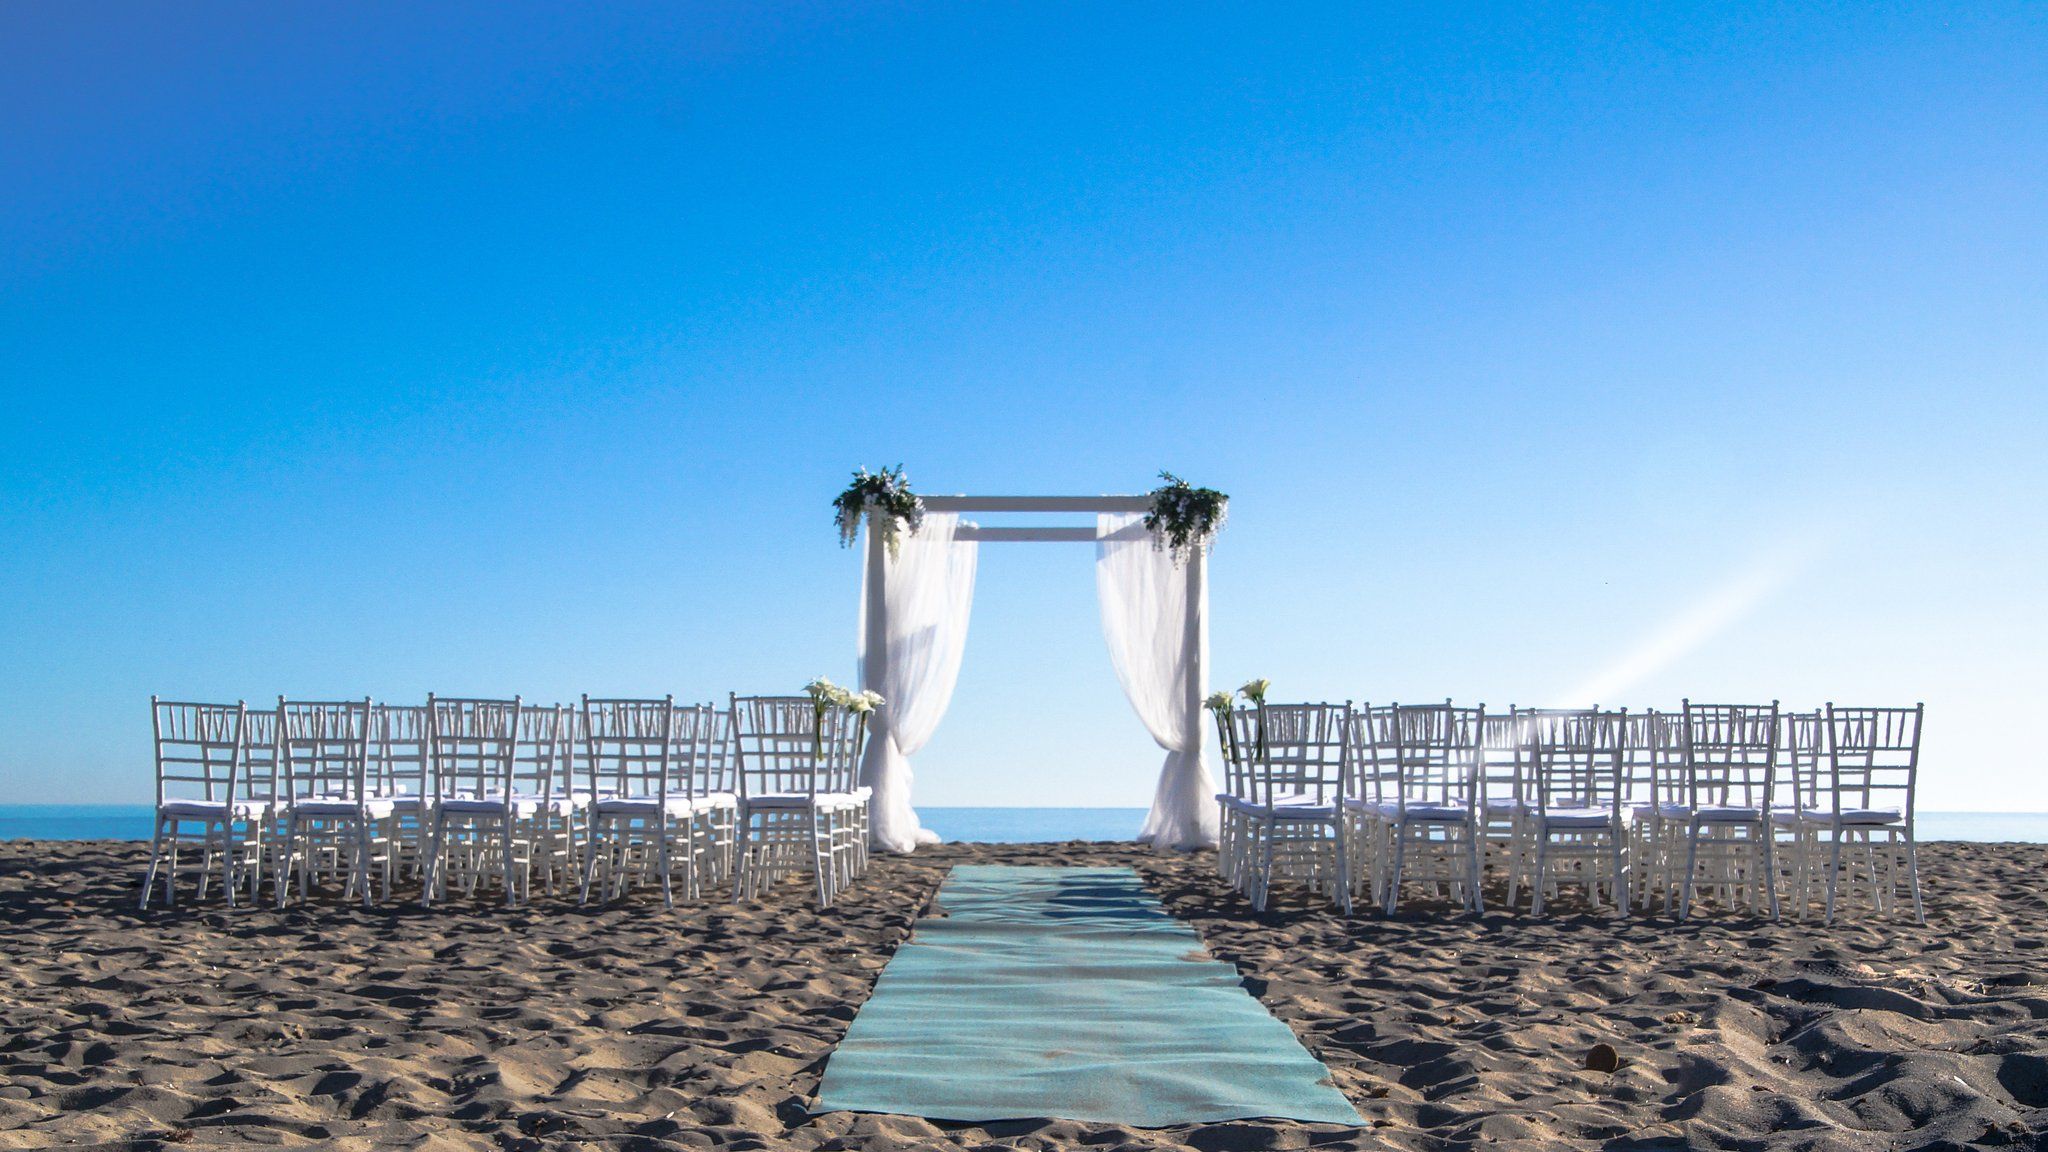 Stock image of a beach wedding venue